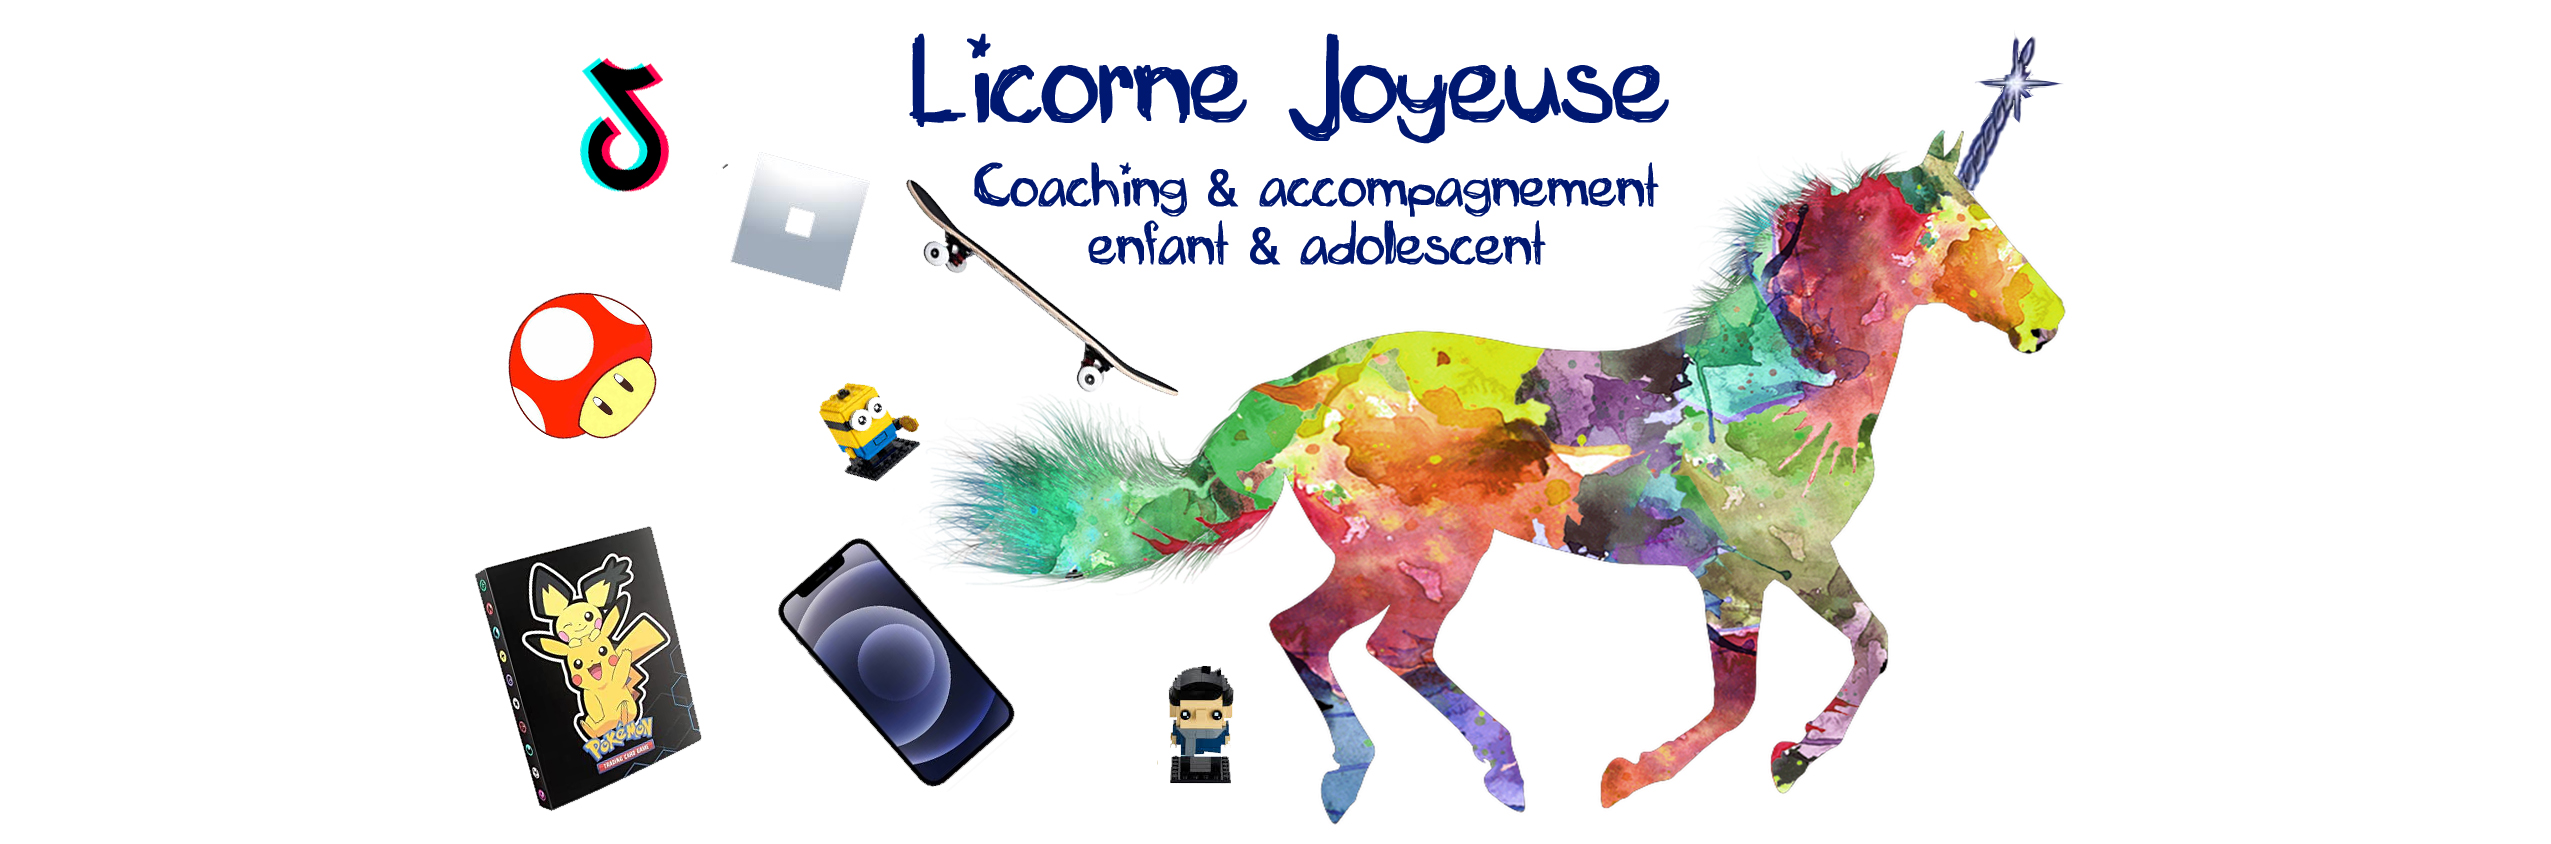 Licorne joyeuse - Coaching & accompagnement pour enfant & ado